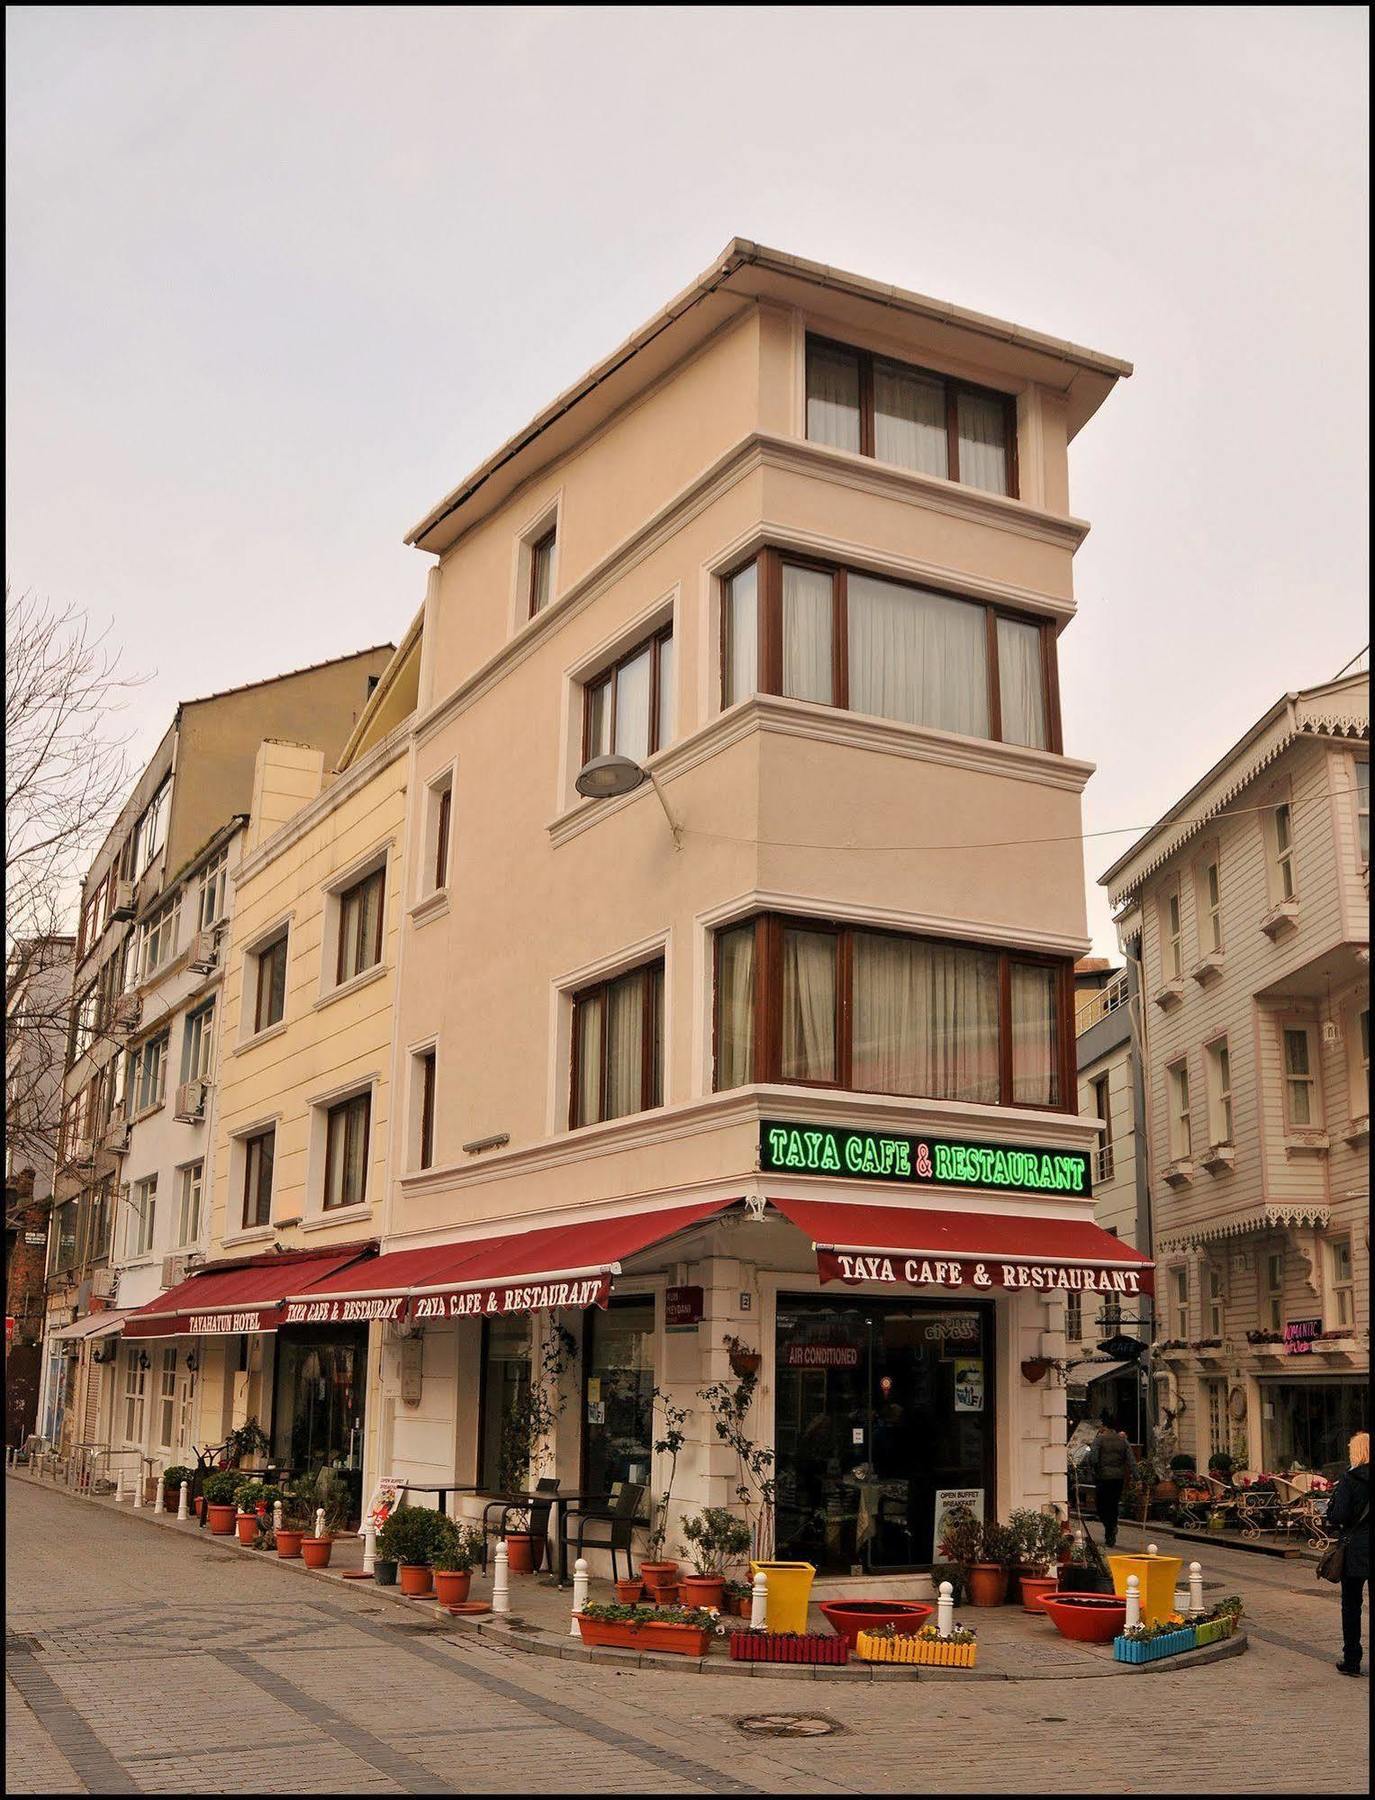 Tayahatun Hotel Стамбул Экстерьер фото